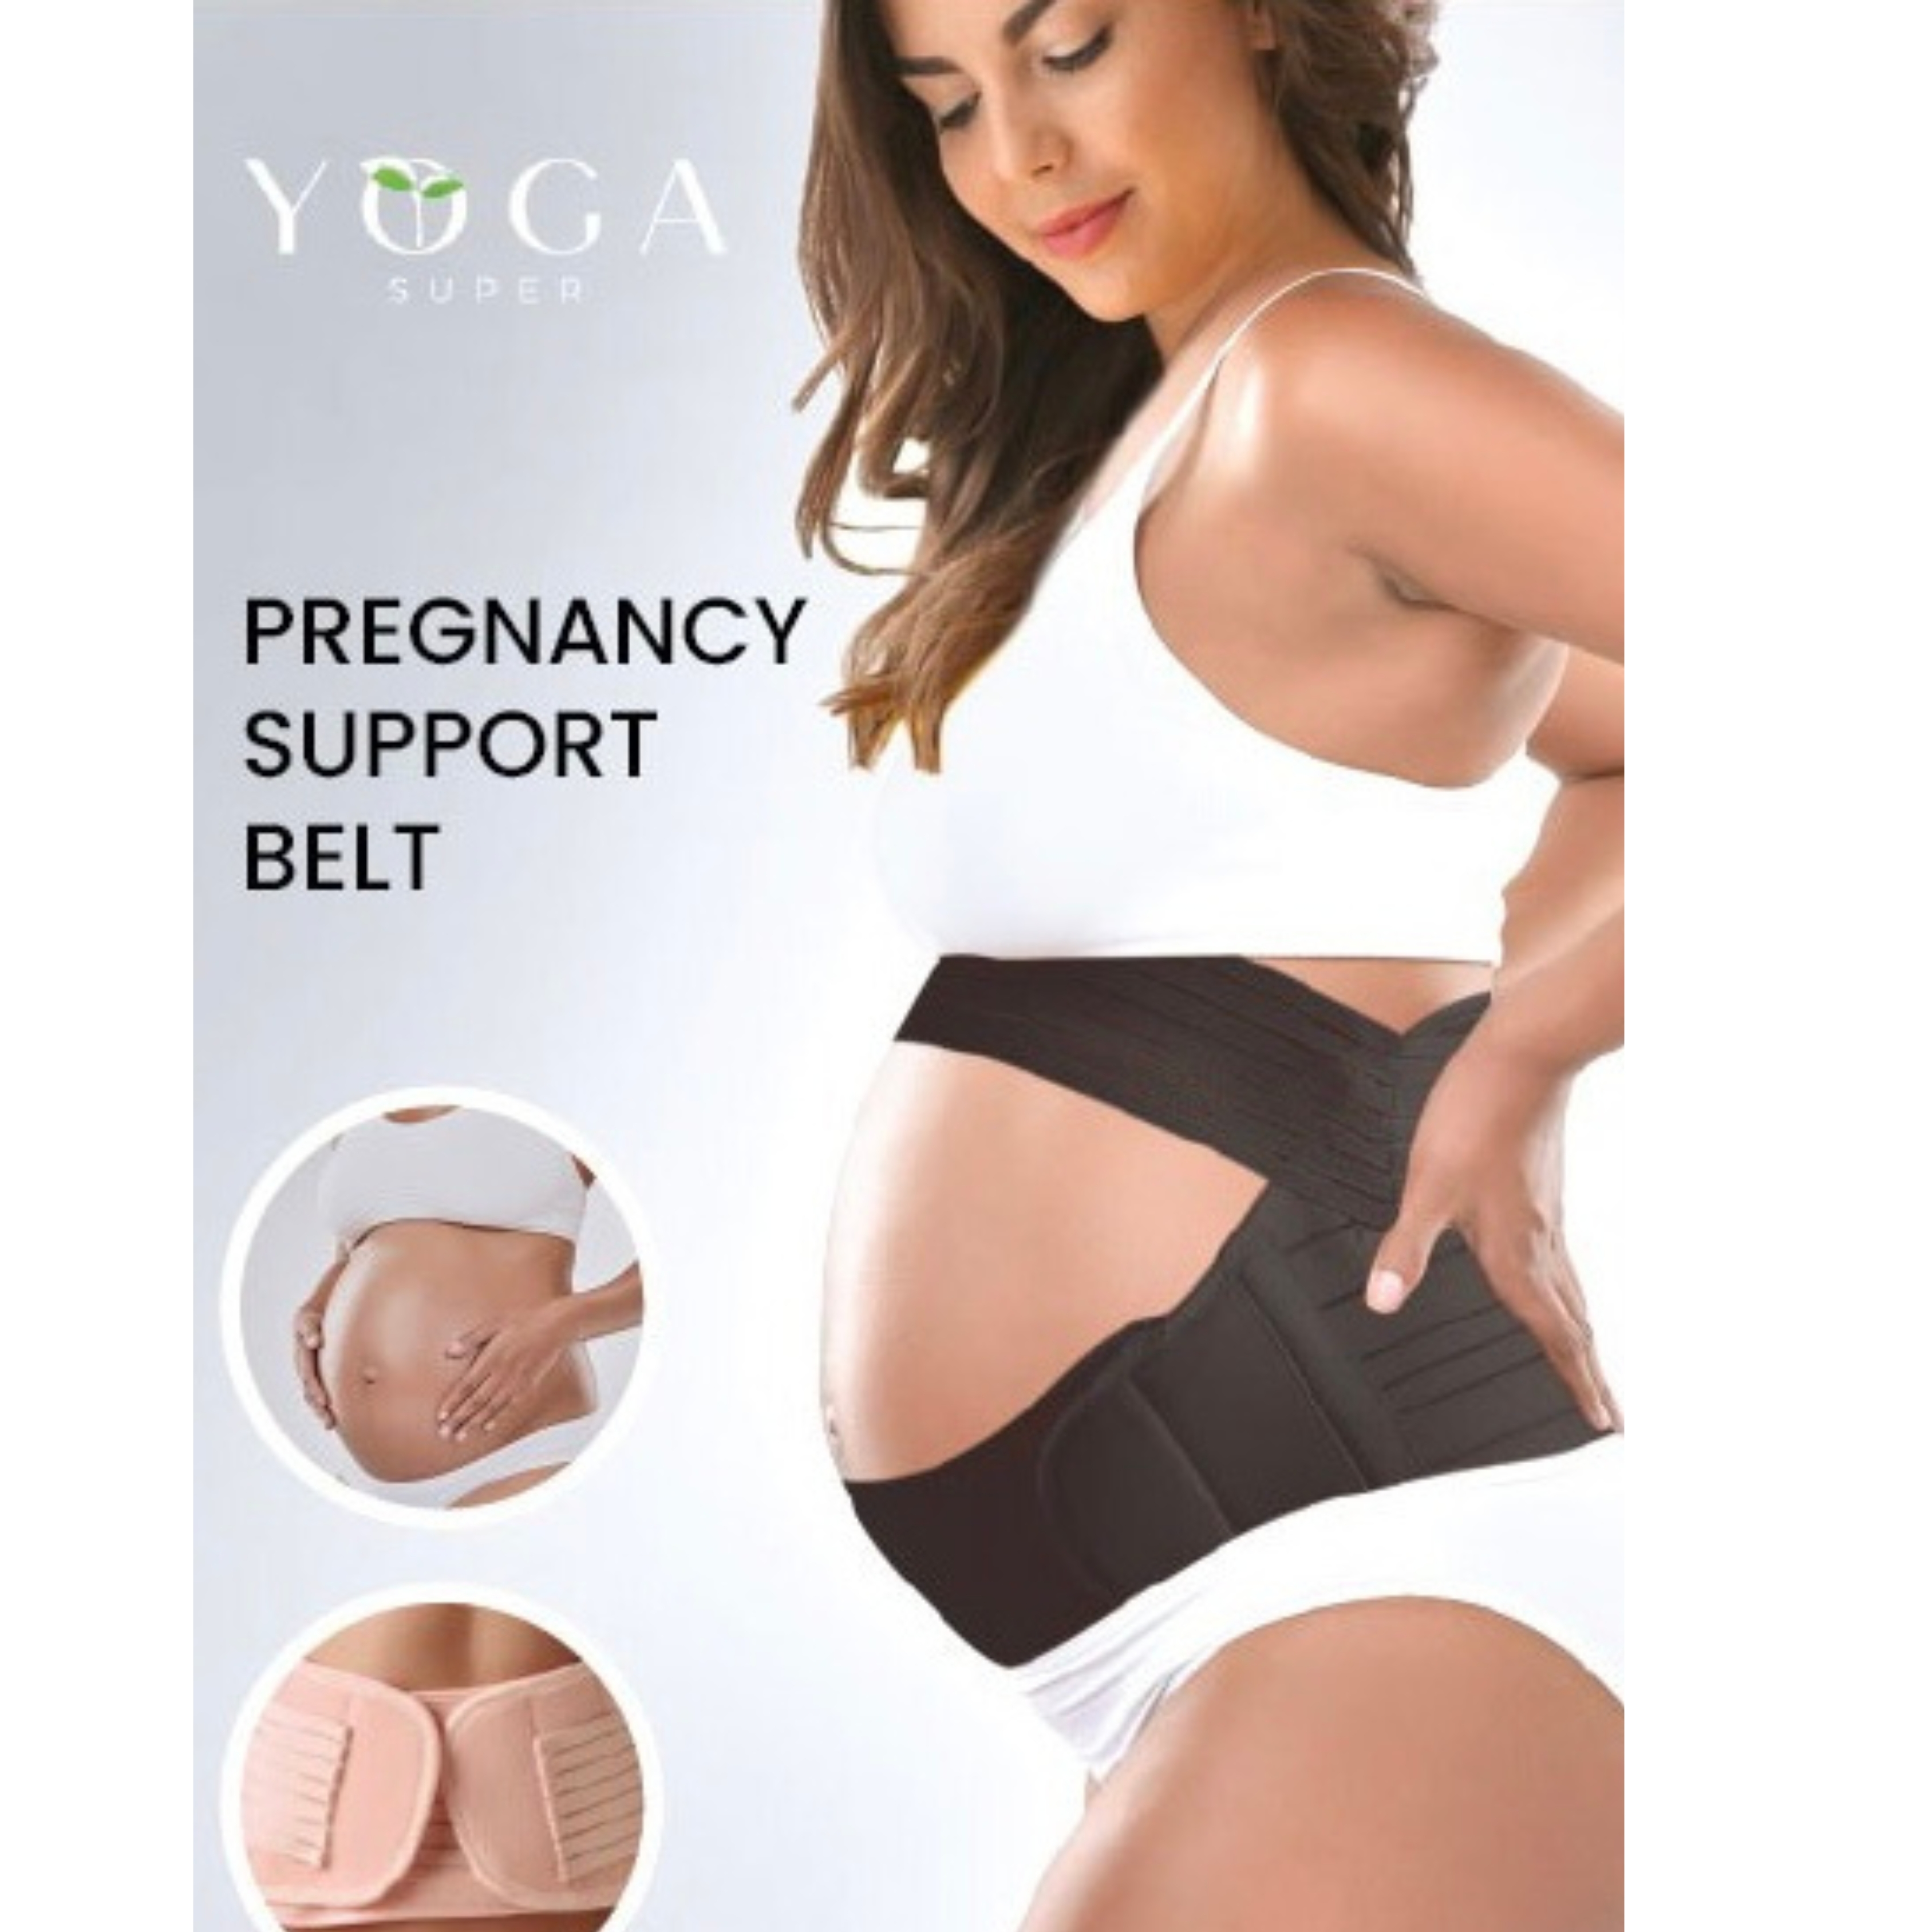 Yogasuper Pregnancy Belt